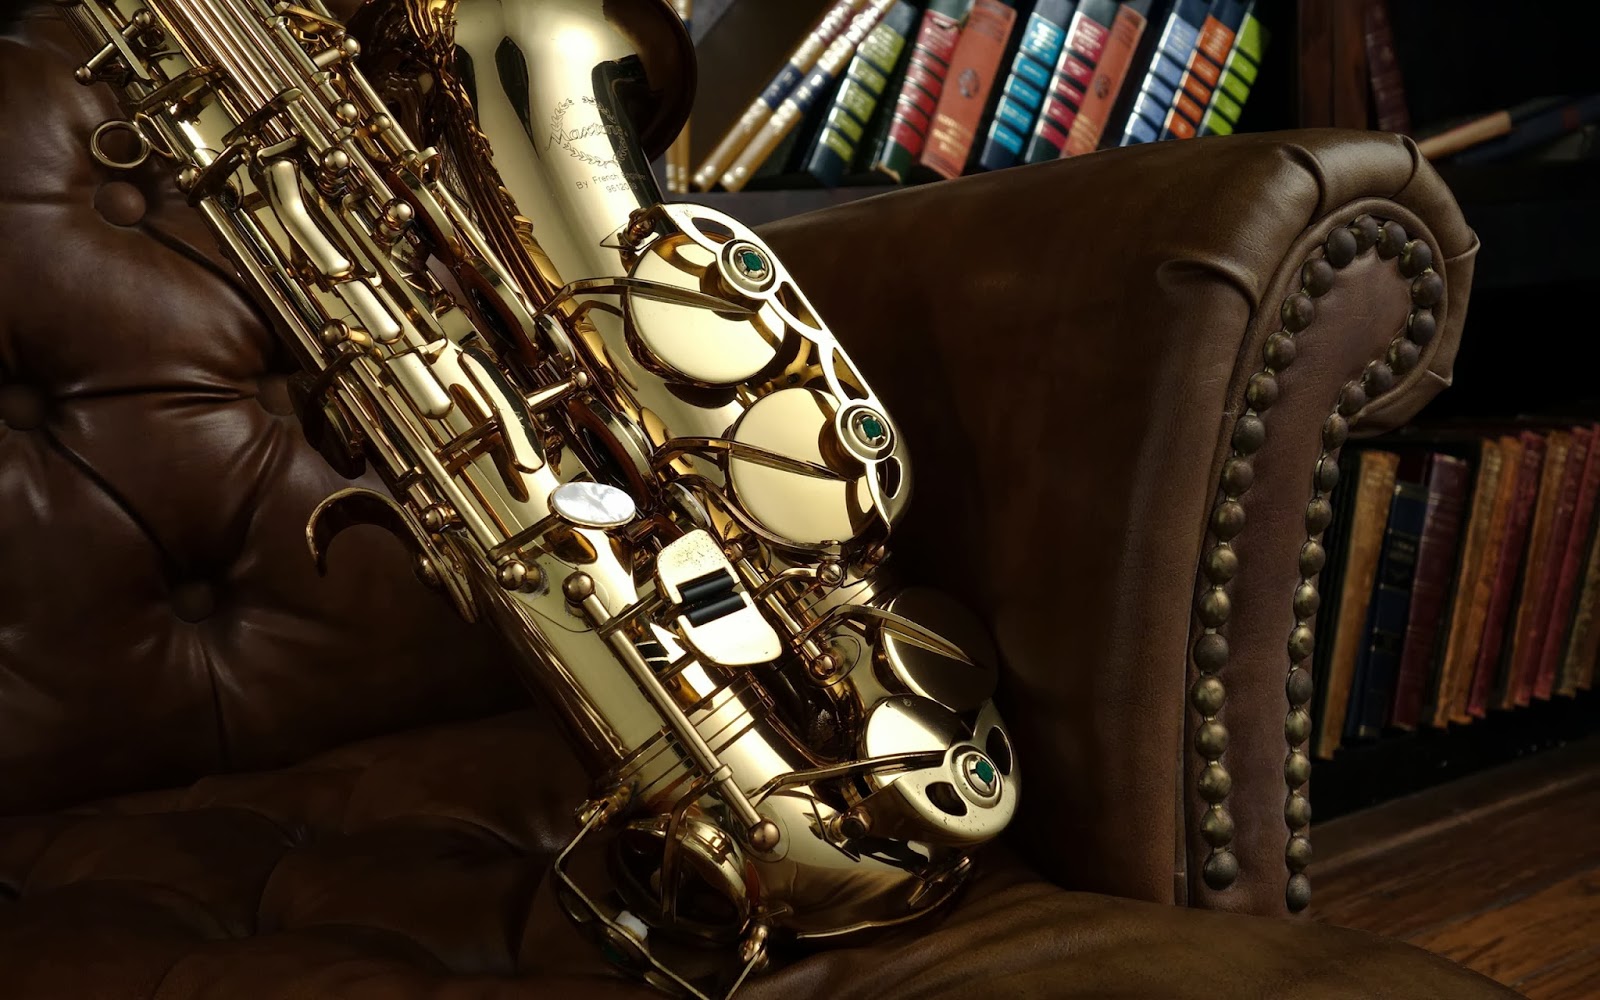 hd saxophone wallpaper,saxophone,musical instrument,clarinet family,woodwind instrument,saxophonist